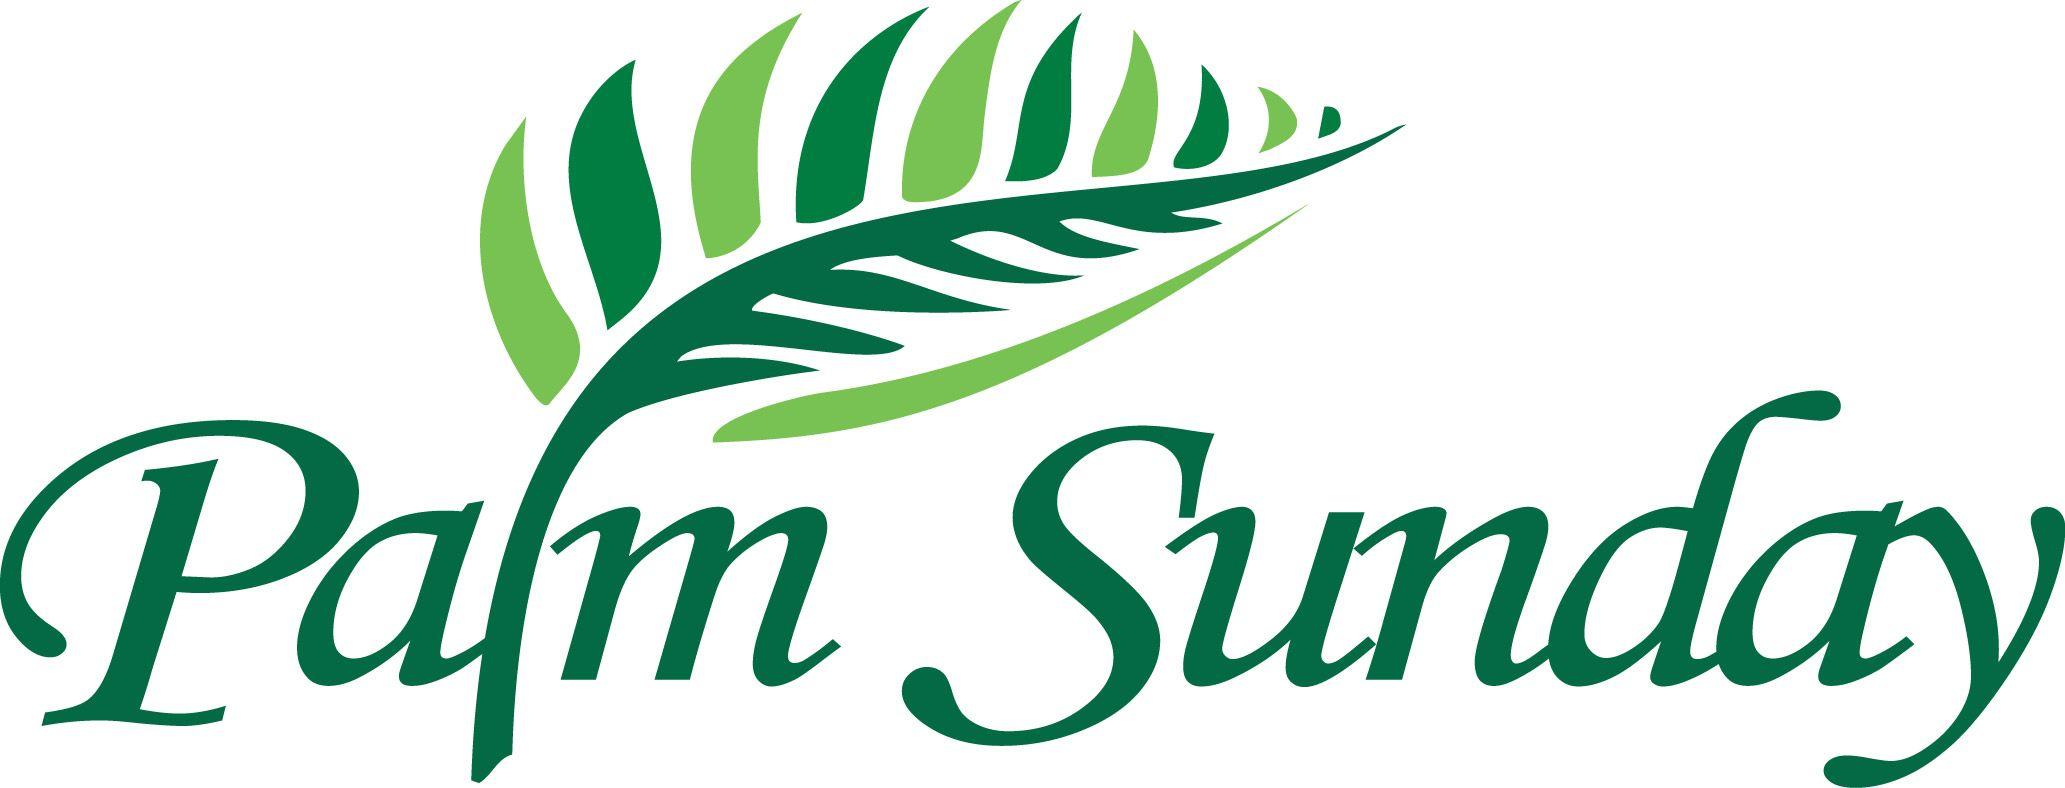 image Of Palm Sunday. Free download best Image Of Palm Sunday